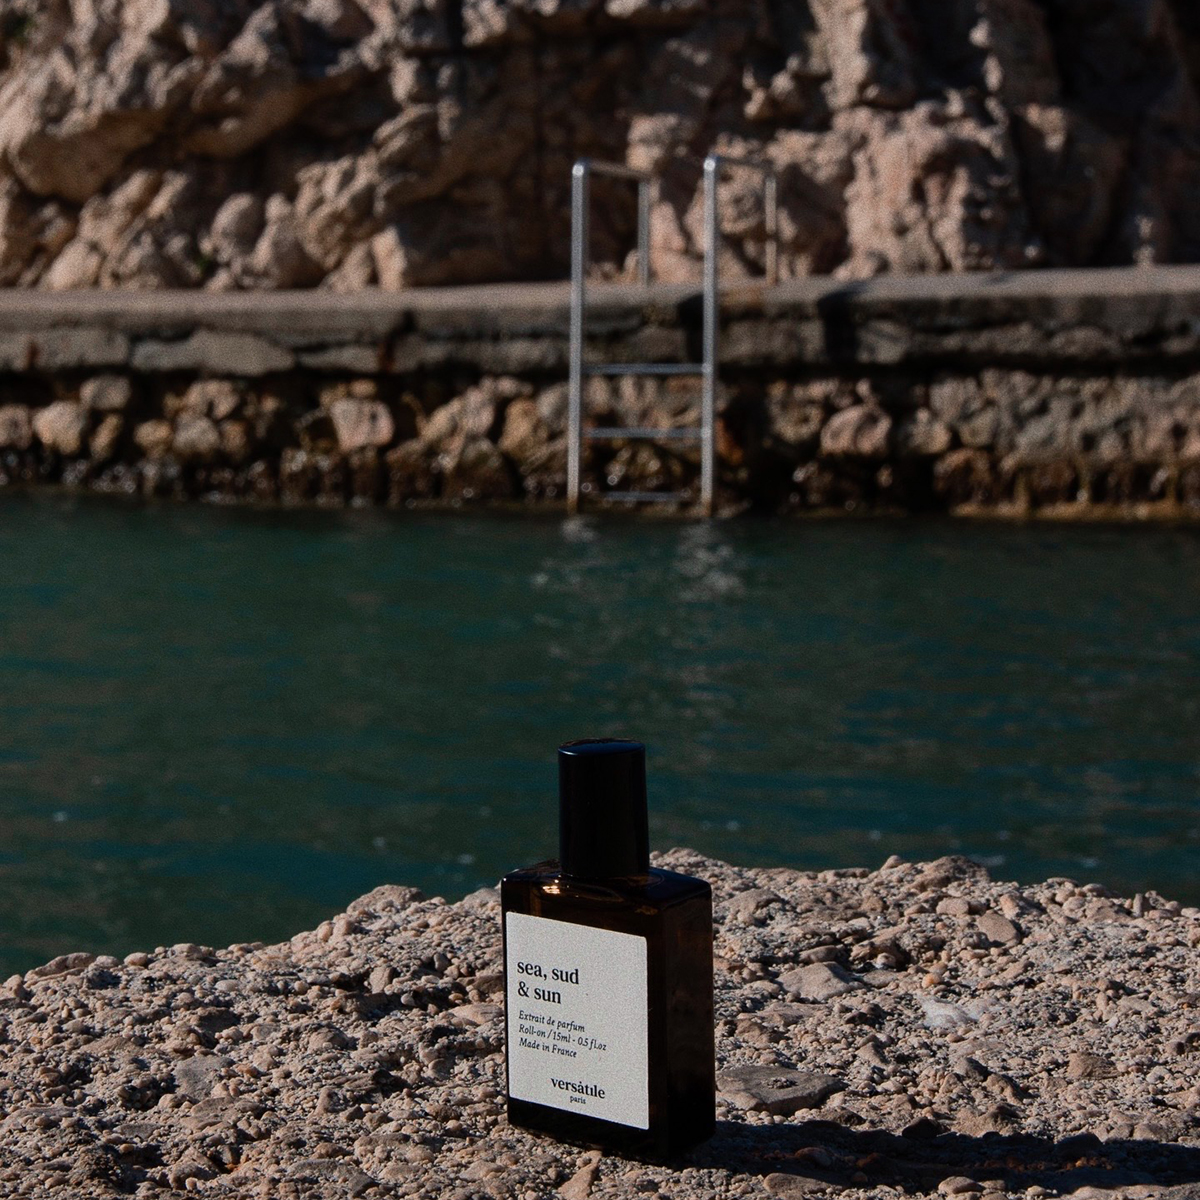 Versatile Paris - Sea, Sud & Sun Extrait De Parfum